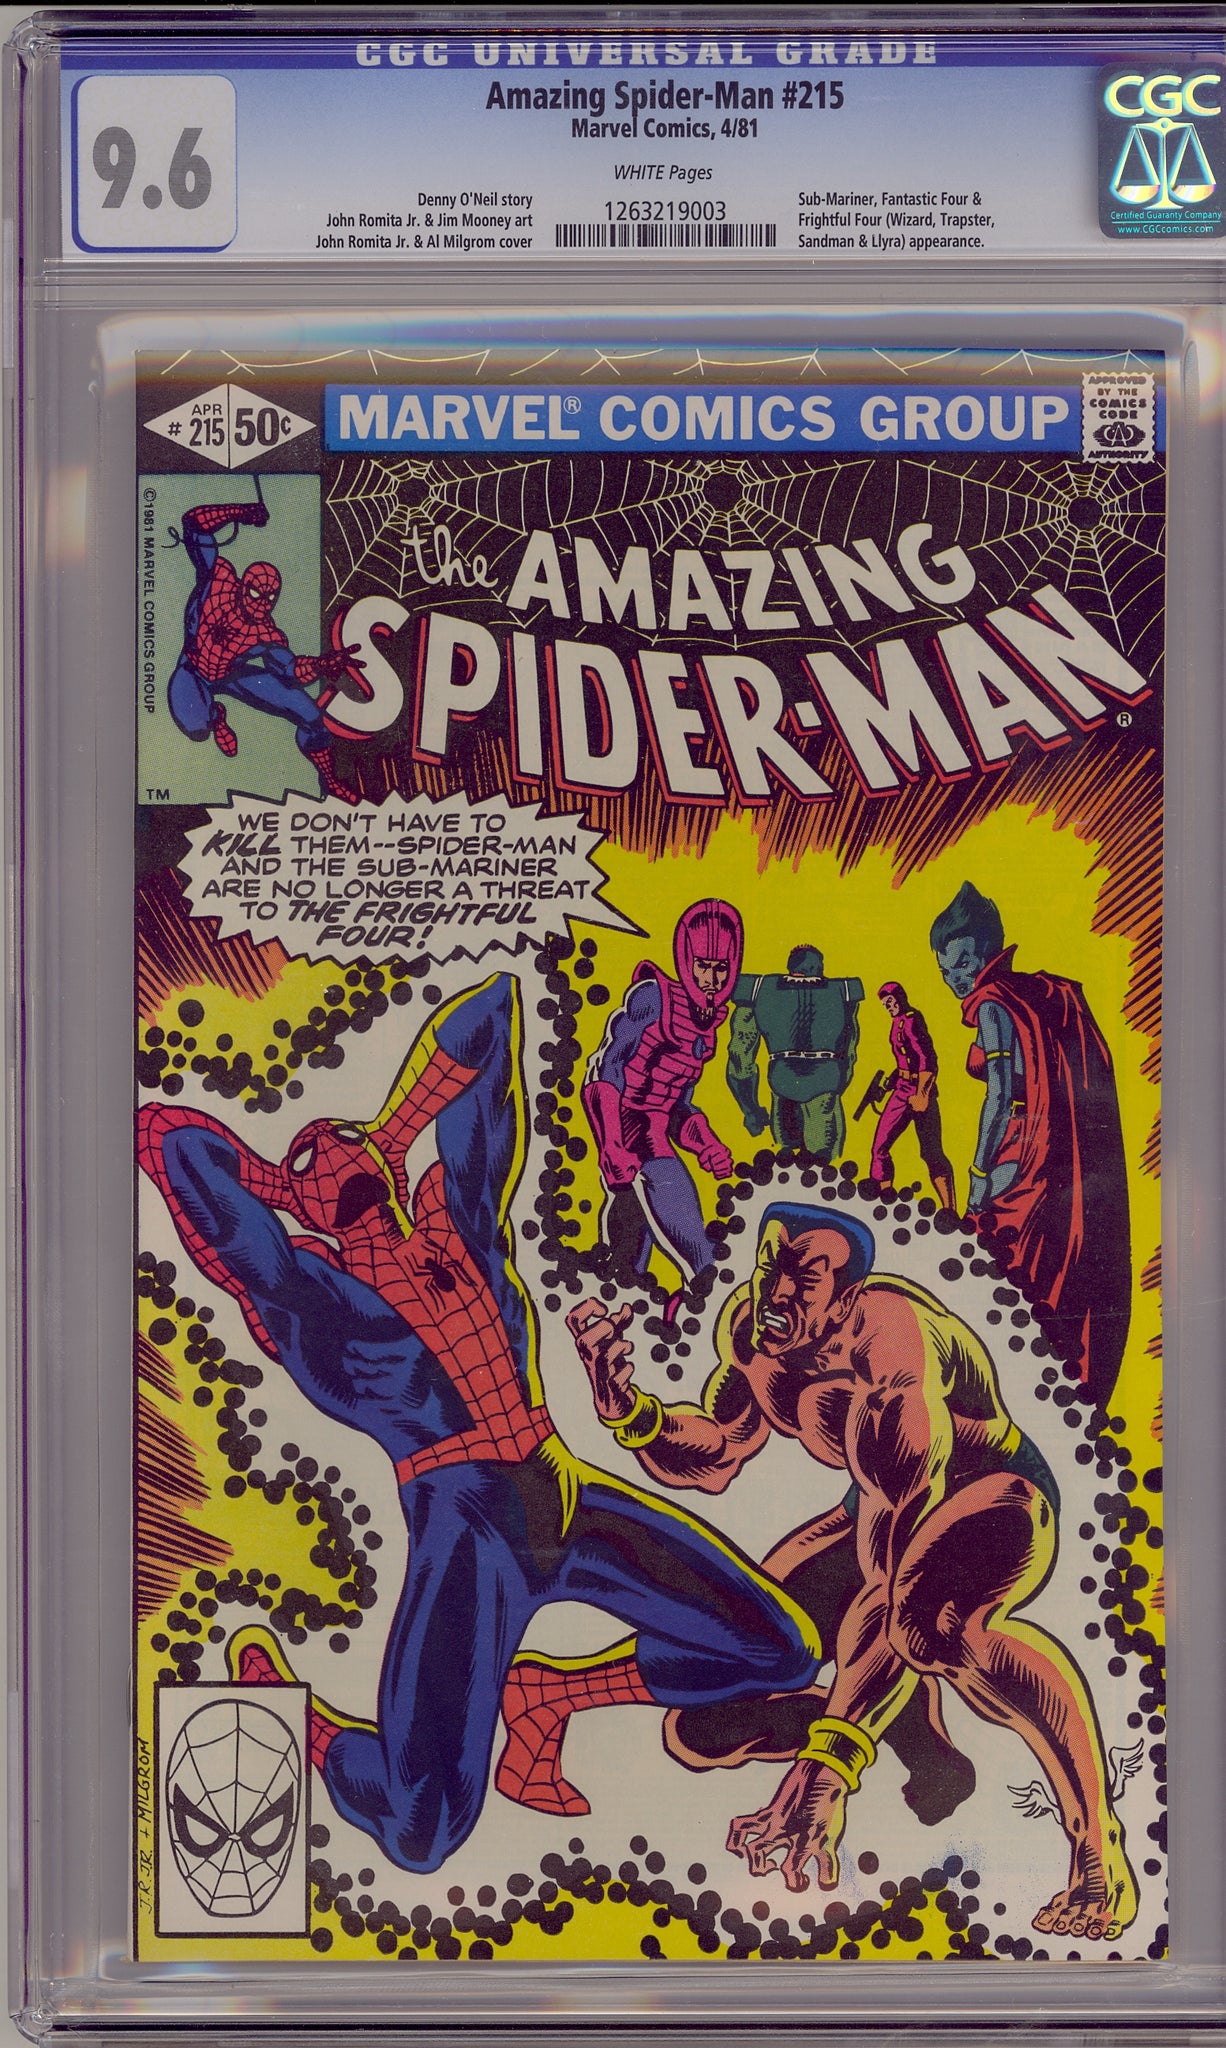 Amazing Spider-Man #215 (1981) Sub-Mariner, Frightful Four